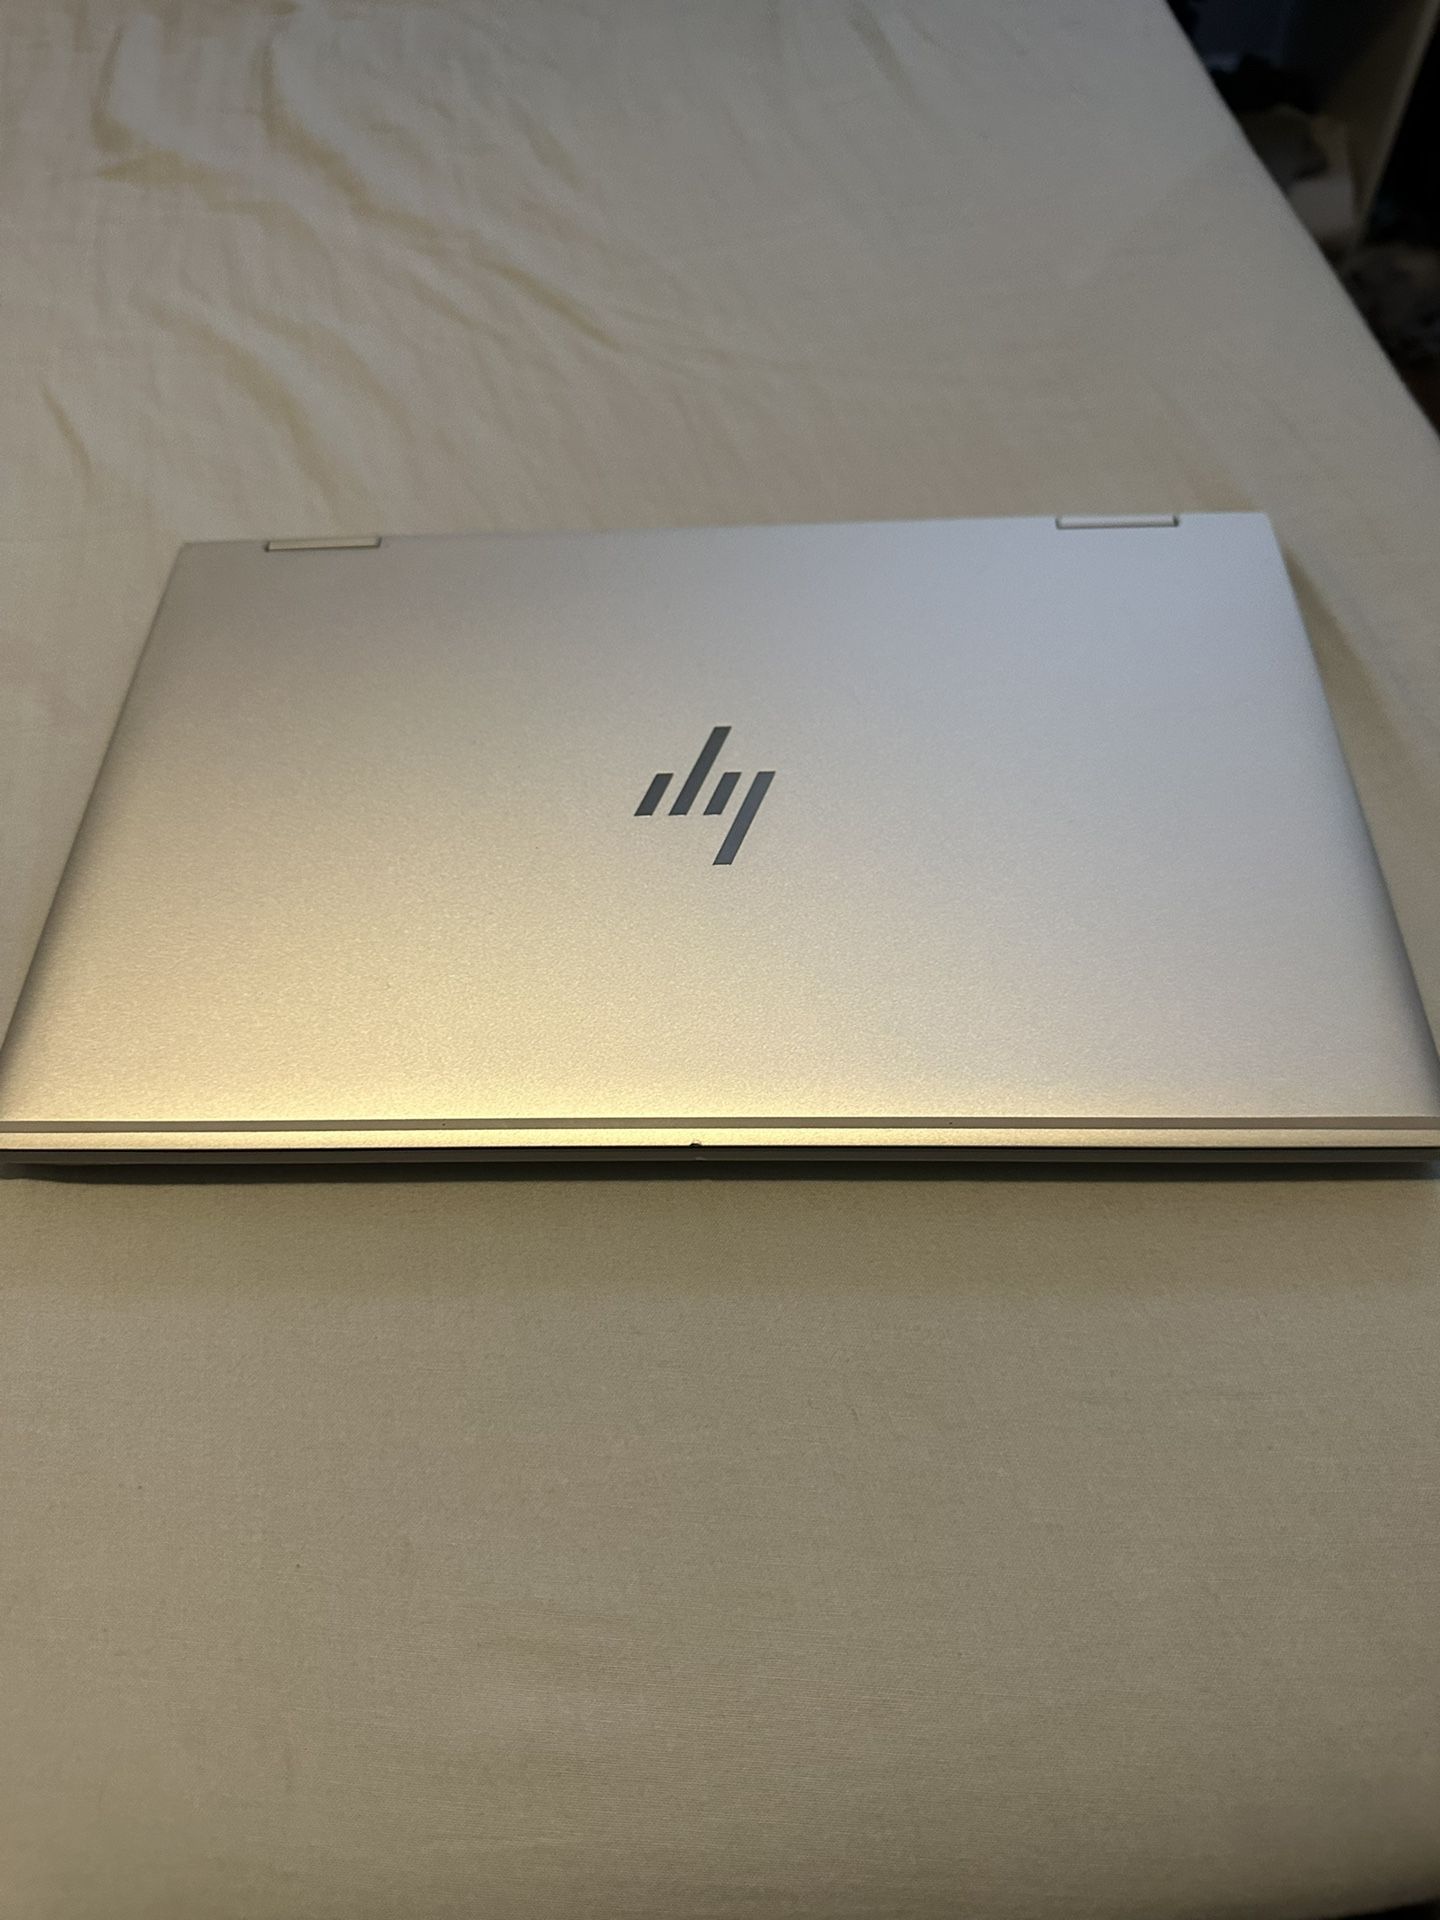 HP Elite book Laptop $275